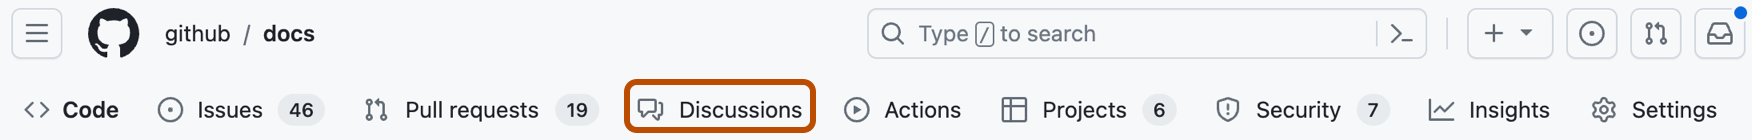 GitHub 存储库中的选项卡的屏幕截图。 “讨论”选项以深橙色标出。